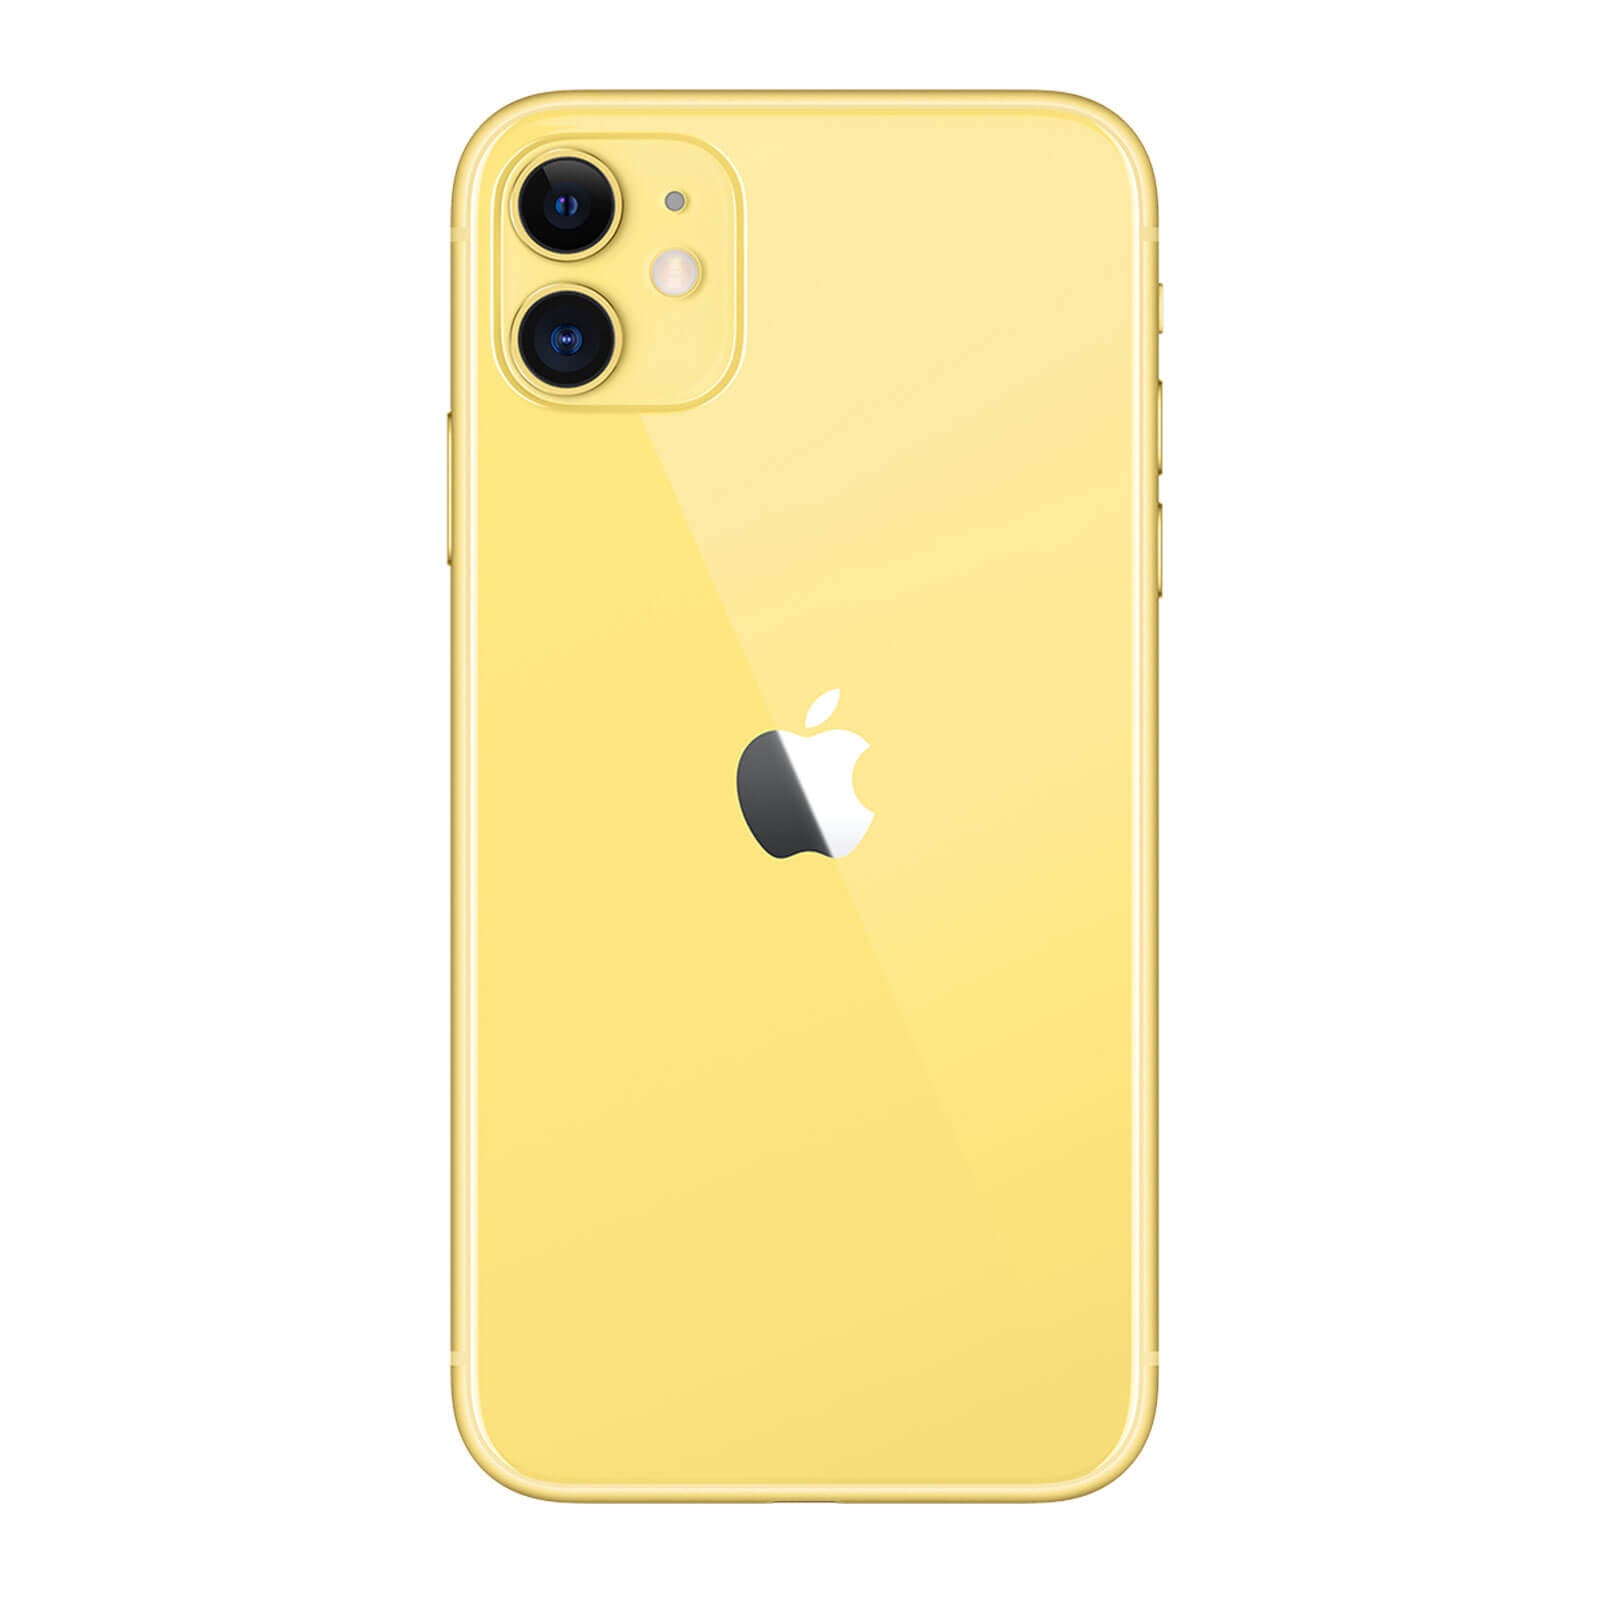 Apple iPhone 11 64GB Yellow Very Good - Sprint